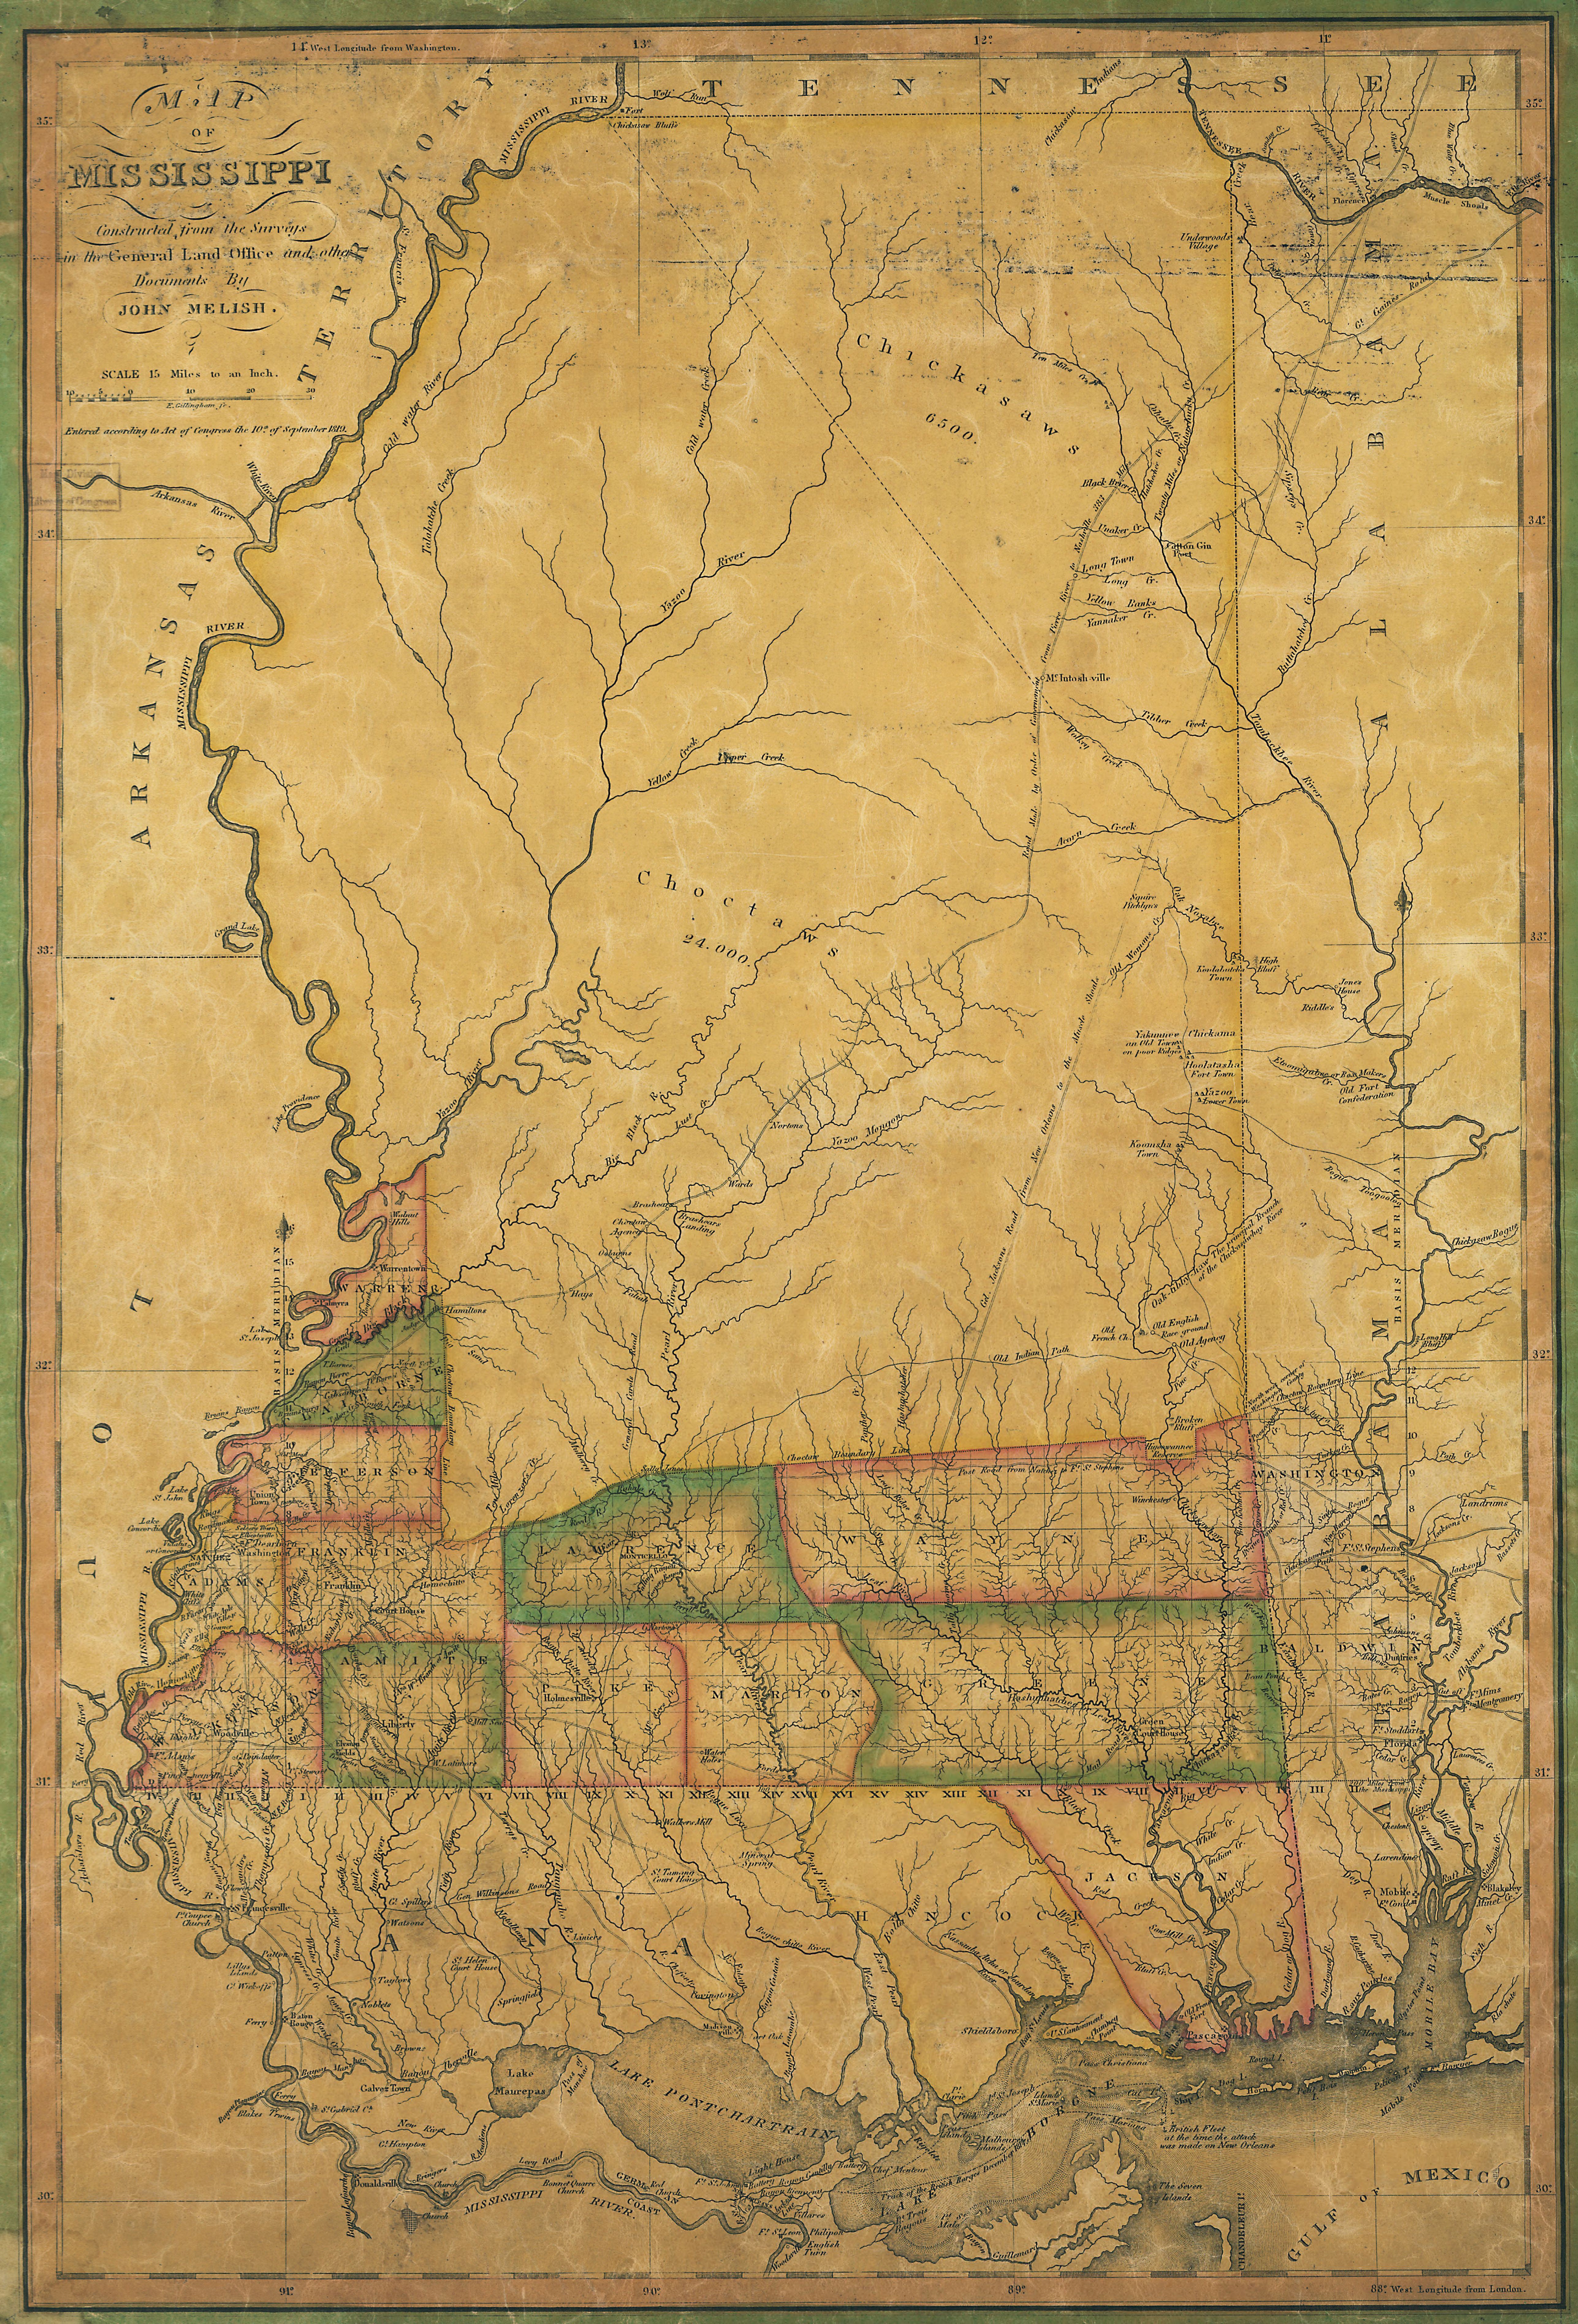 1820 Melish Map of Mississippi